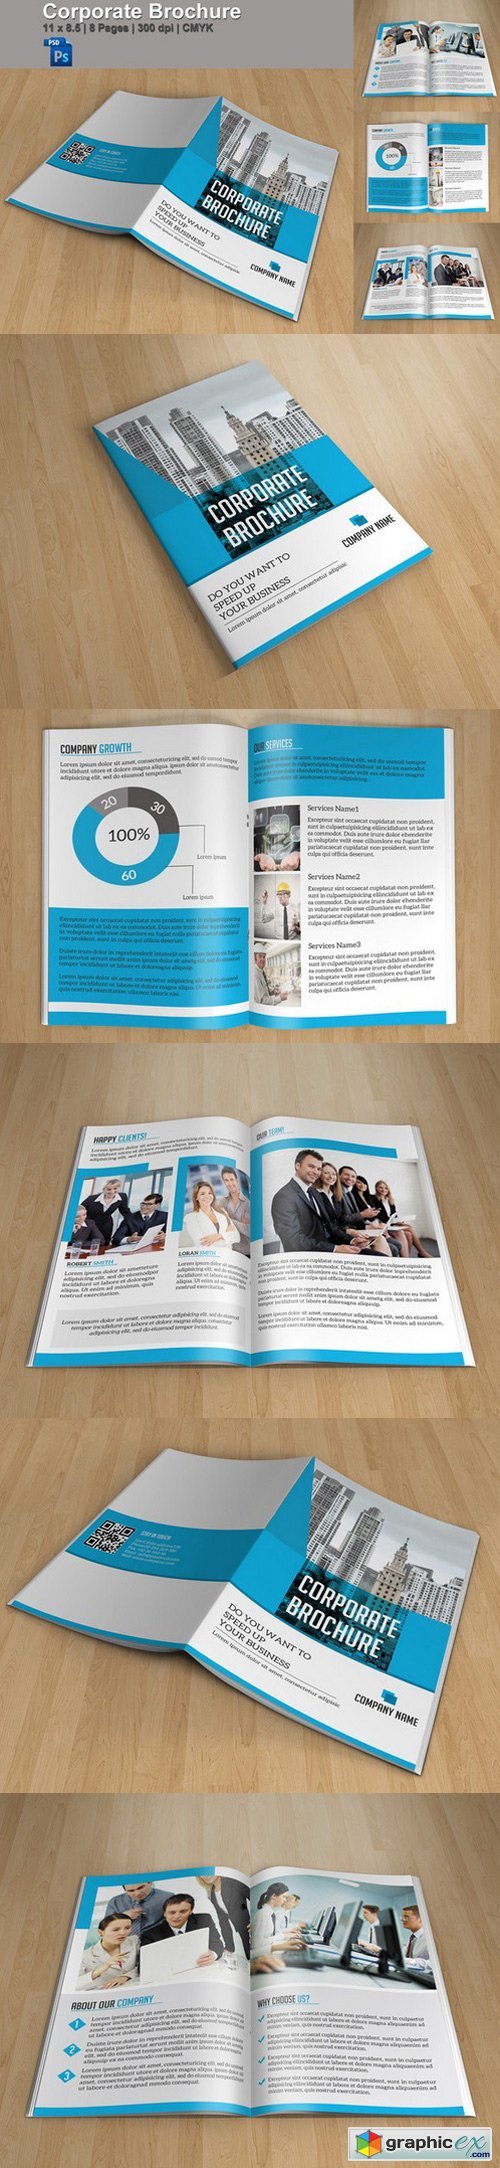 Corporate Brochure-V316